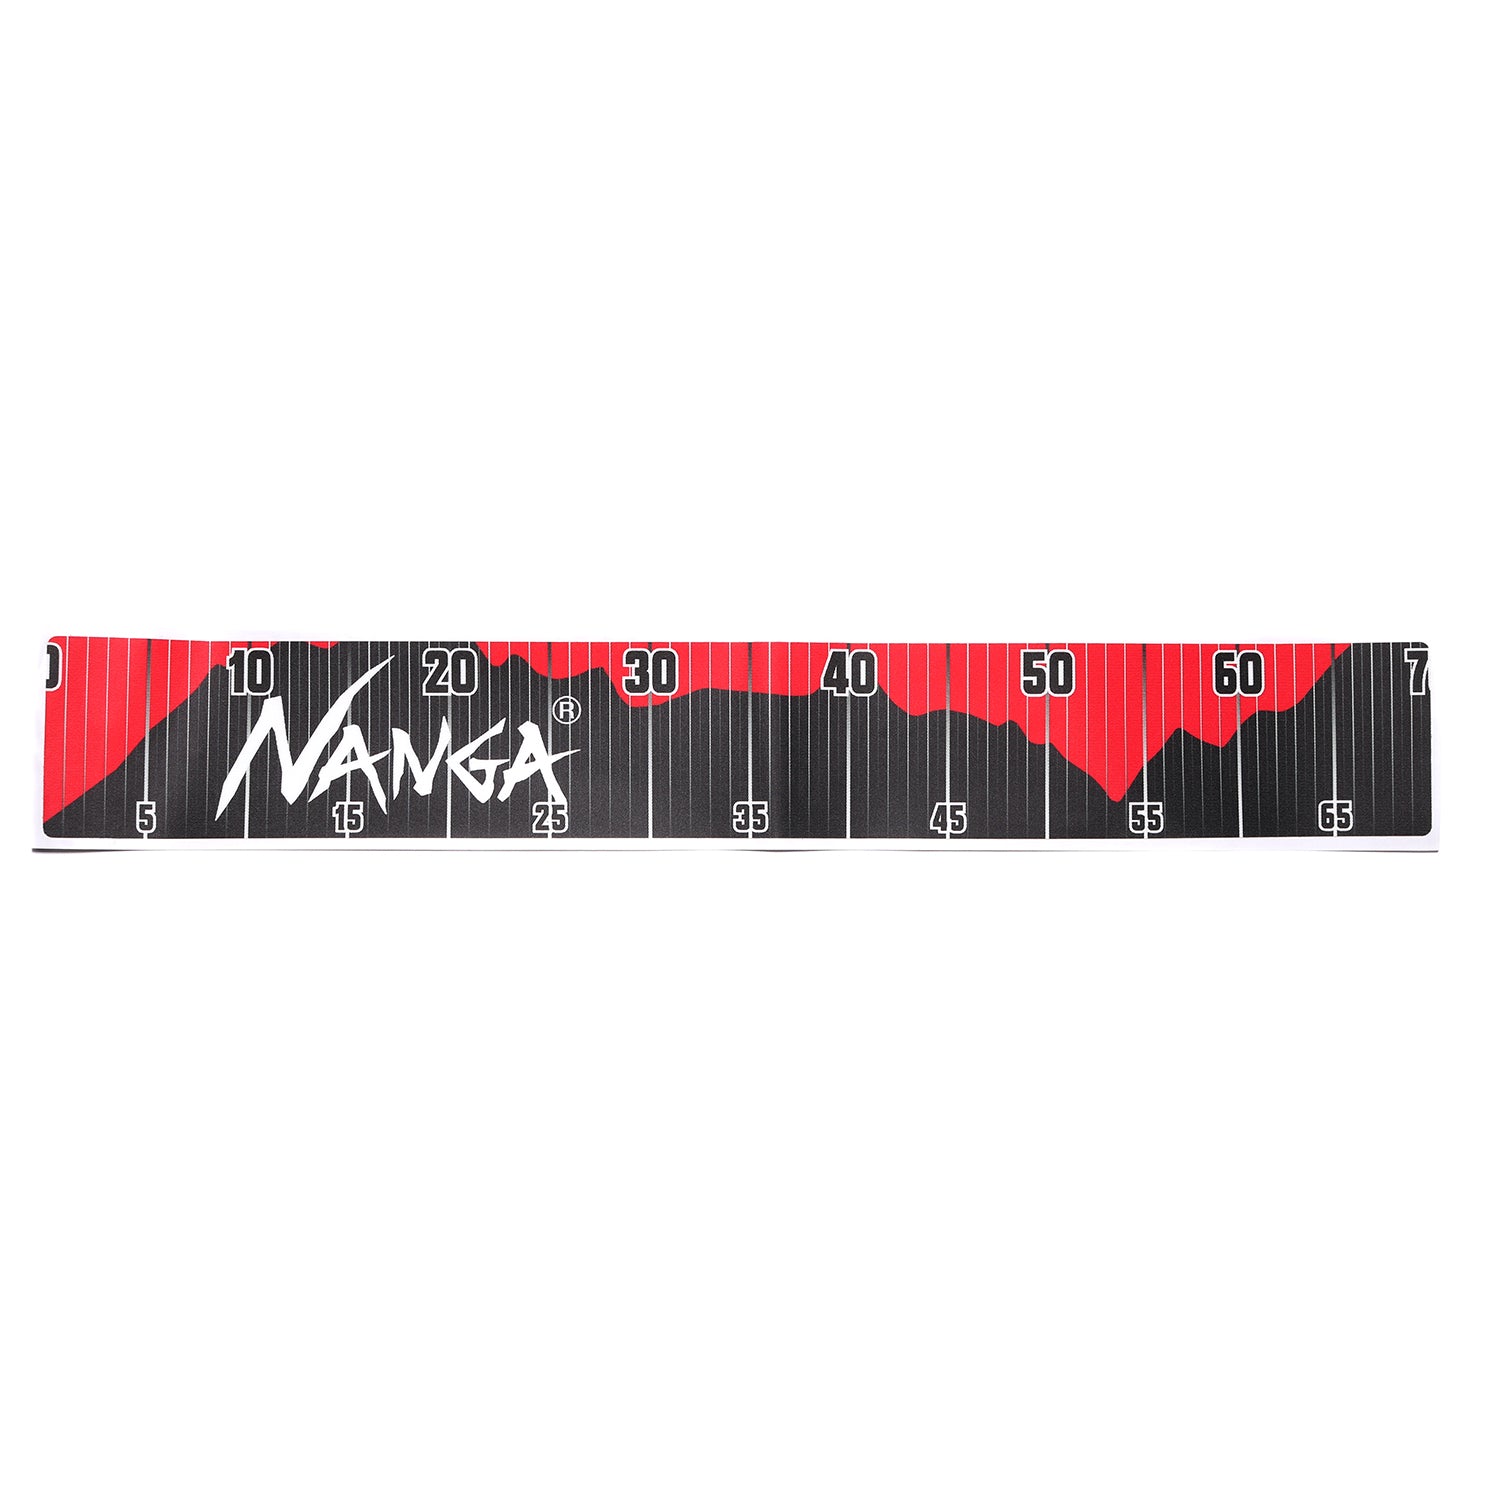 NANGA Deck Measure sticker